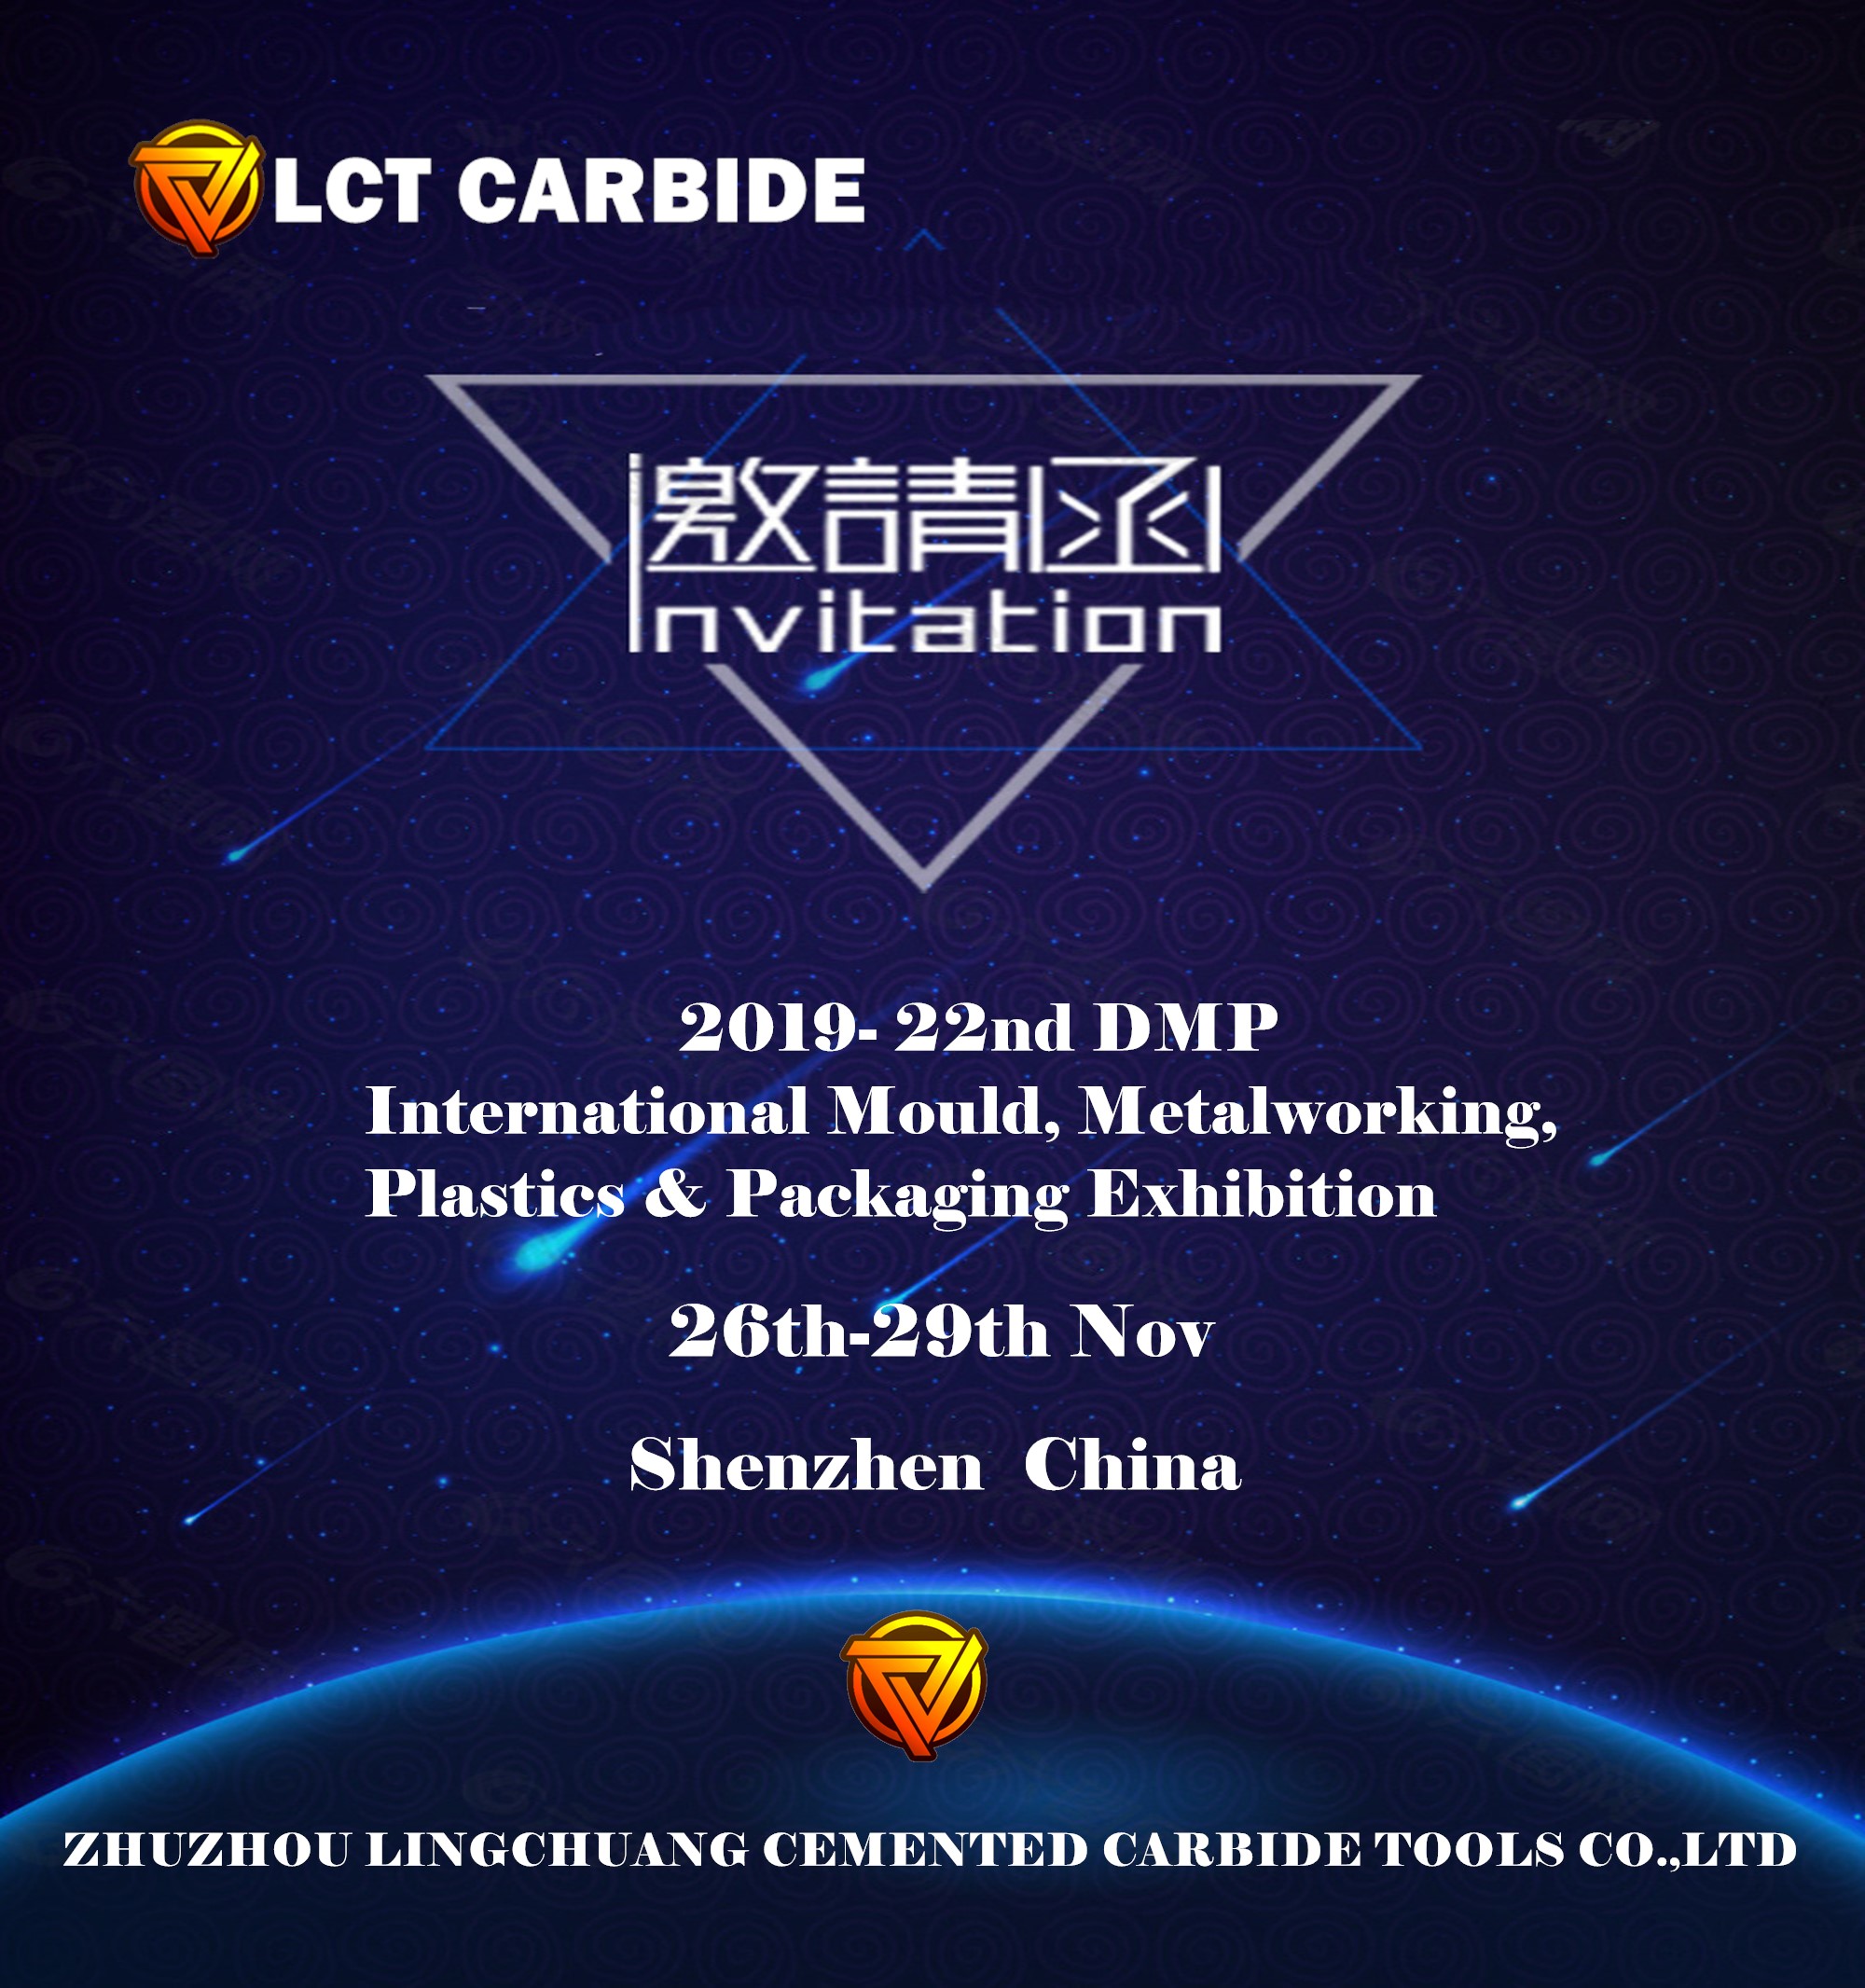 2019 DMP INVITATION LCT CARBIDE.jpg